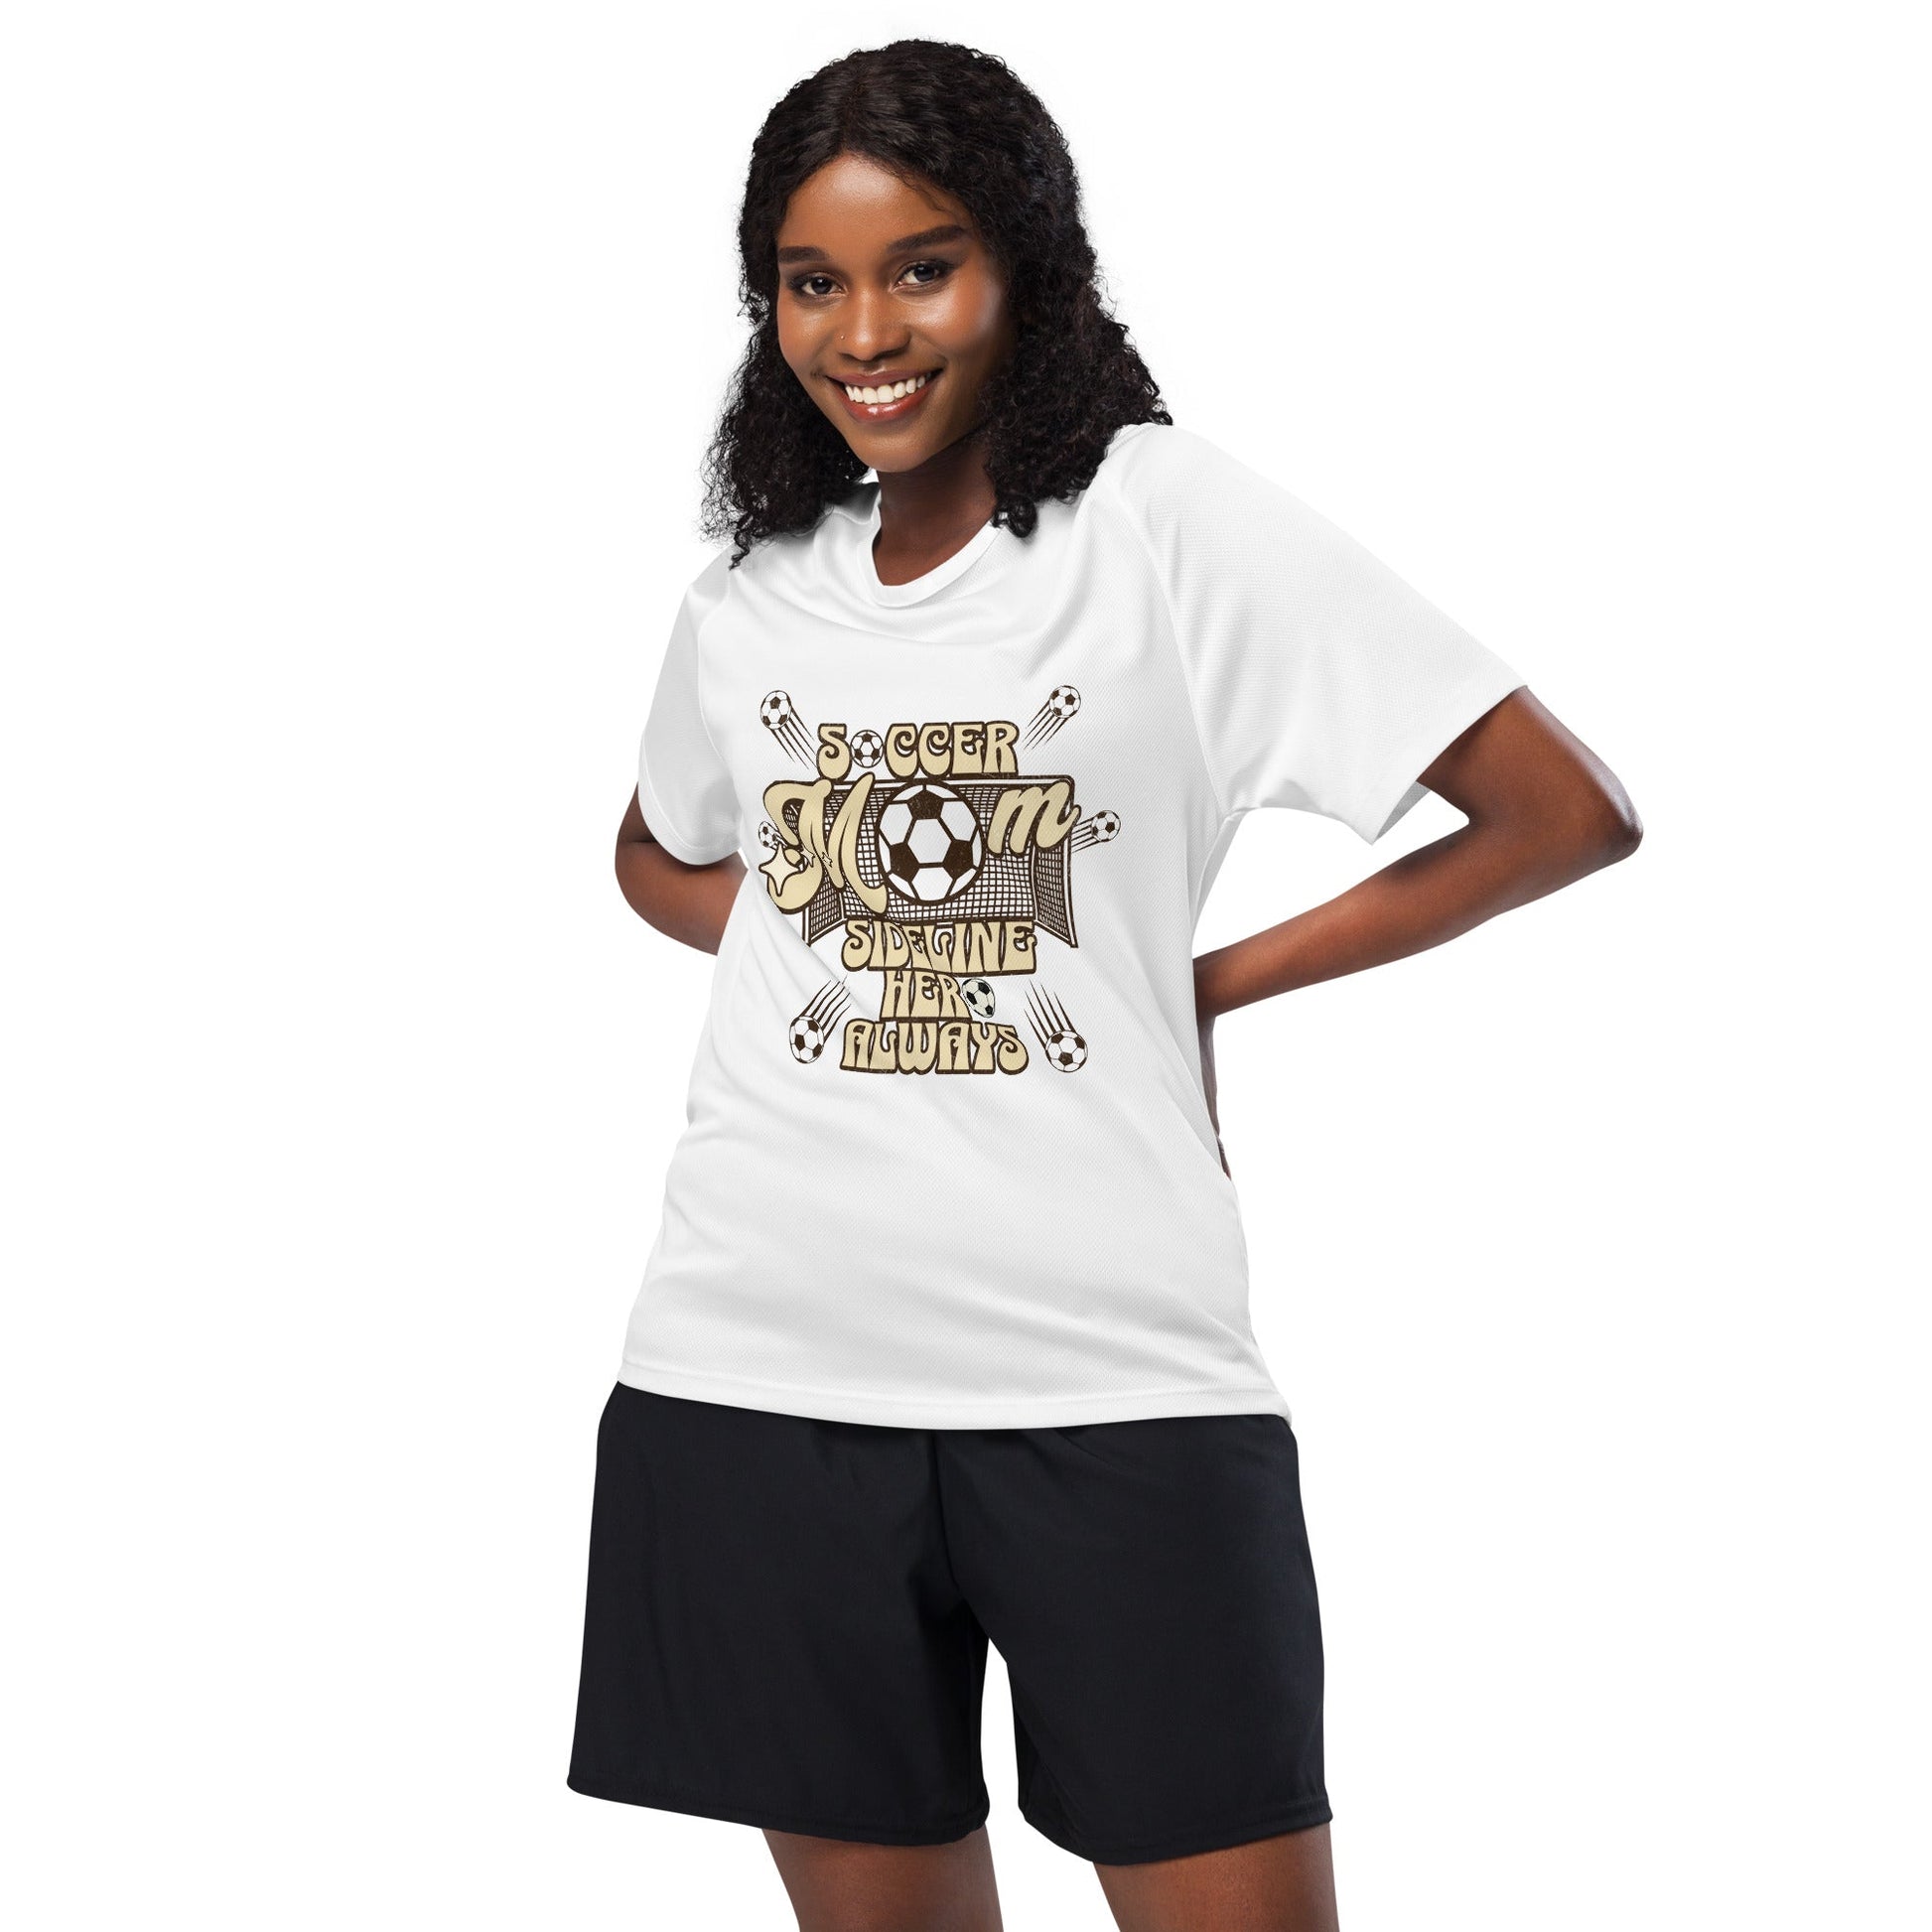 Soccer MOM Sideline Hero Always Sports Jersey-sweatshirt-White-S-mysticalcherry